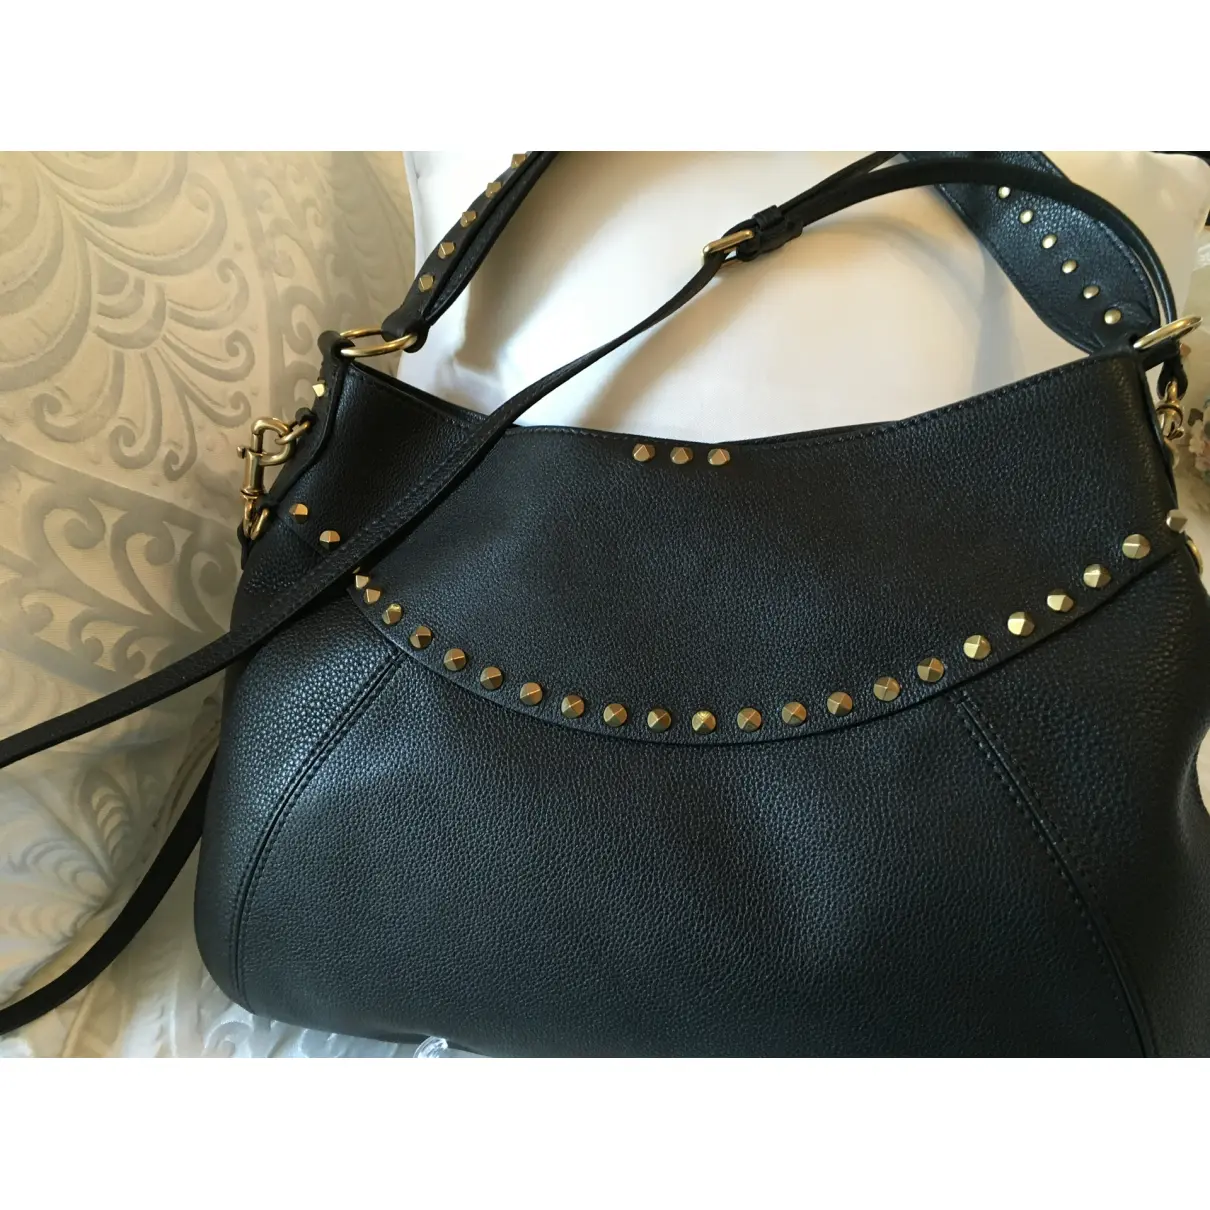 Rockstud Hobo leather handbag Valentino Garavani